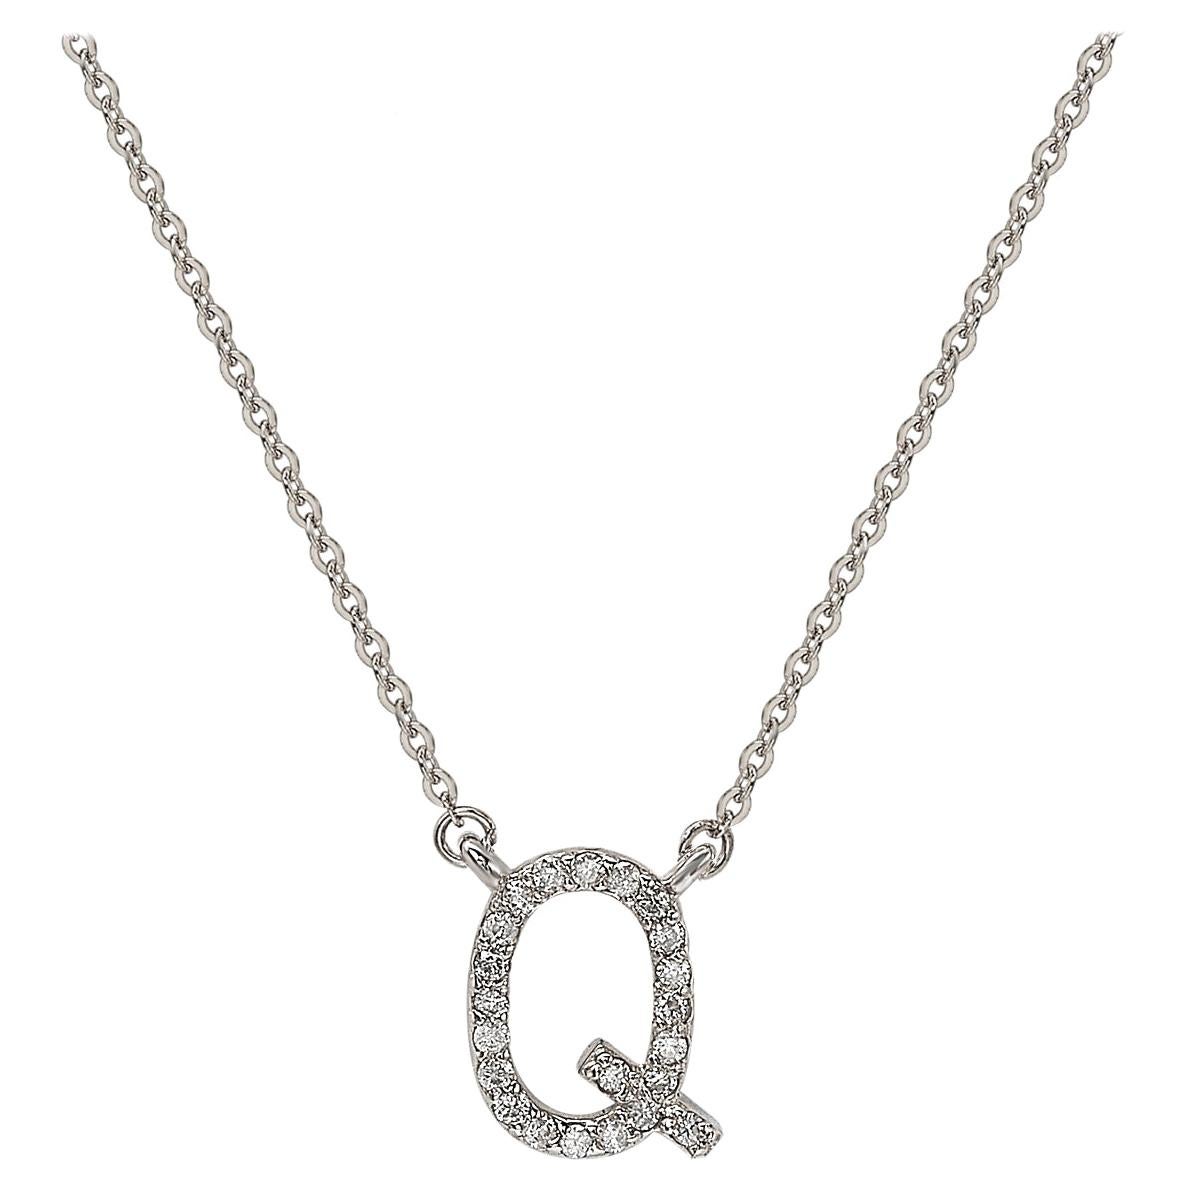  Suzy Levian 0.10 Carat White Diamond 14K White Gold Letter Initial Necklace, Q For Sale